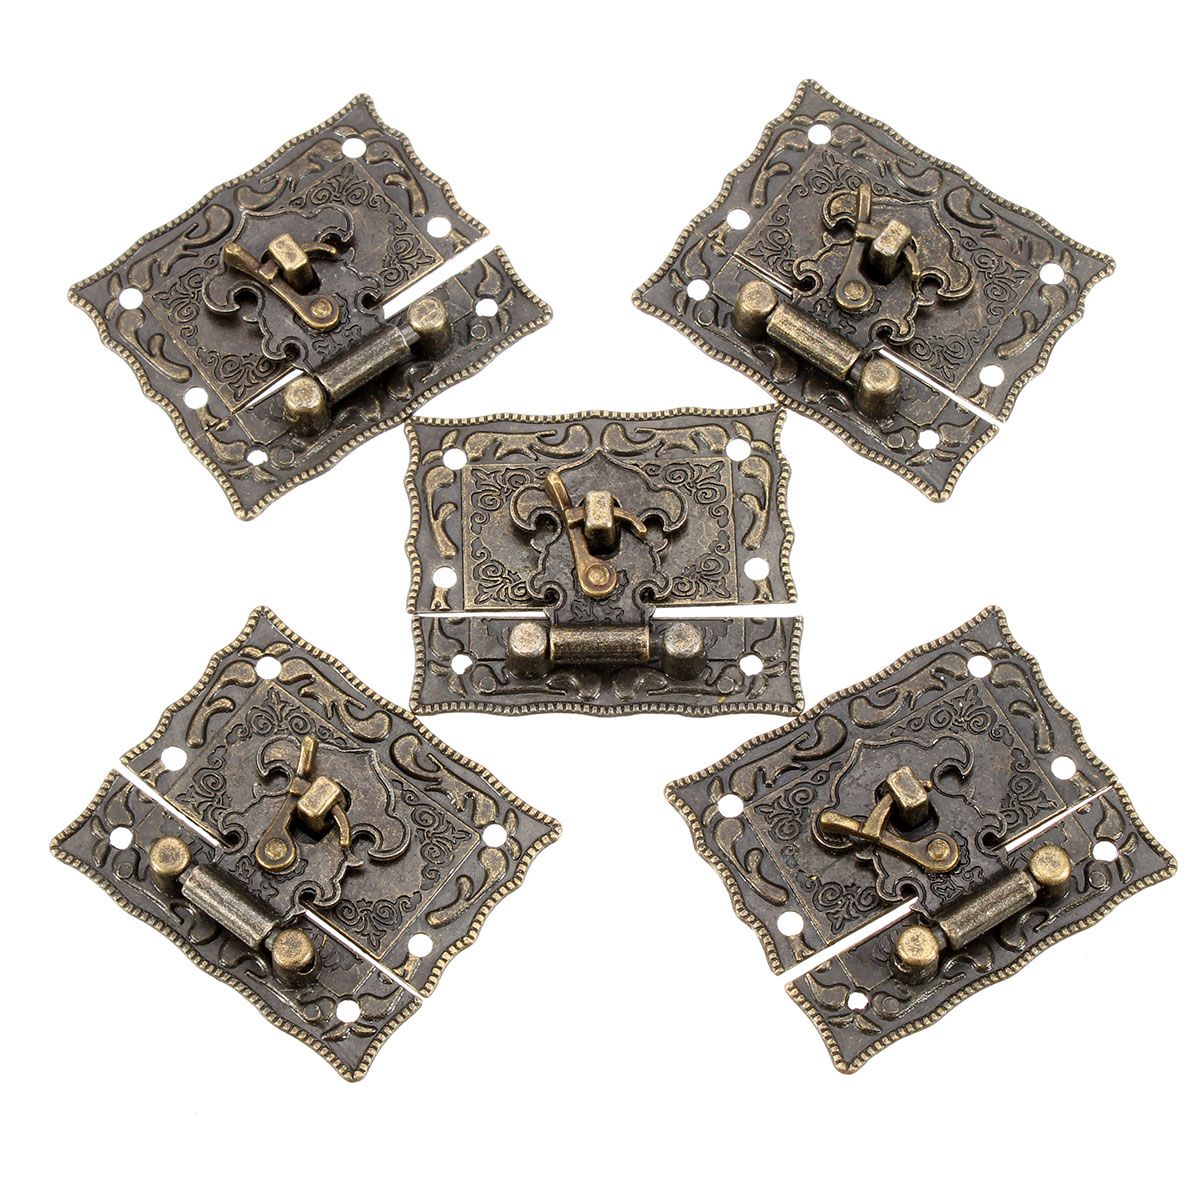 5Sets-Bronze-Wooden-Lock-Box-Suitcase-Toggle-Latch-Buckles-Tone-51cm-x29cm-1038739